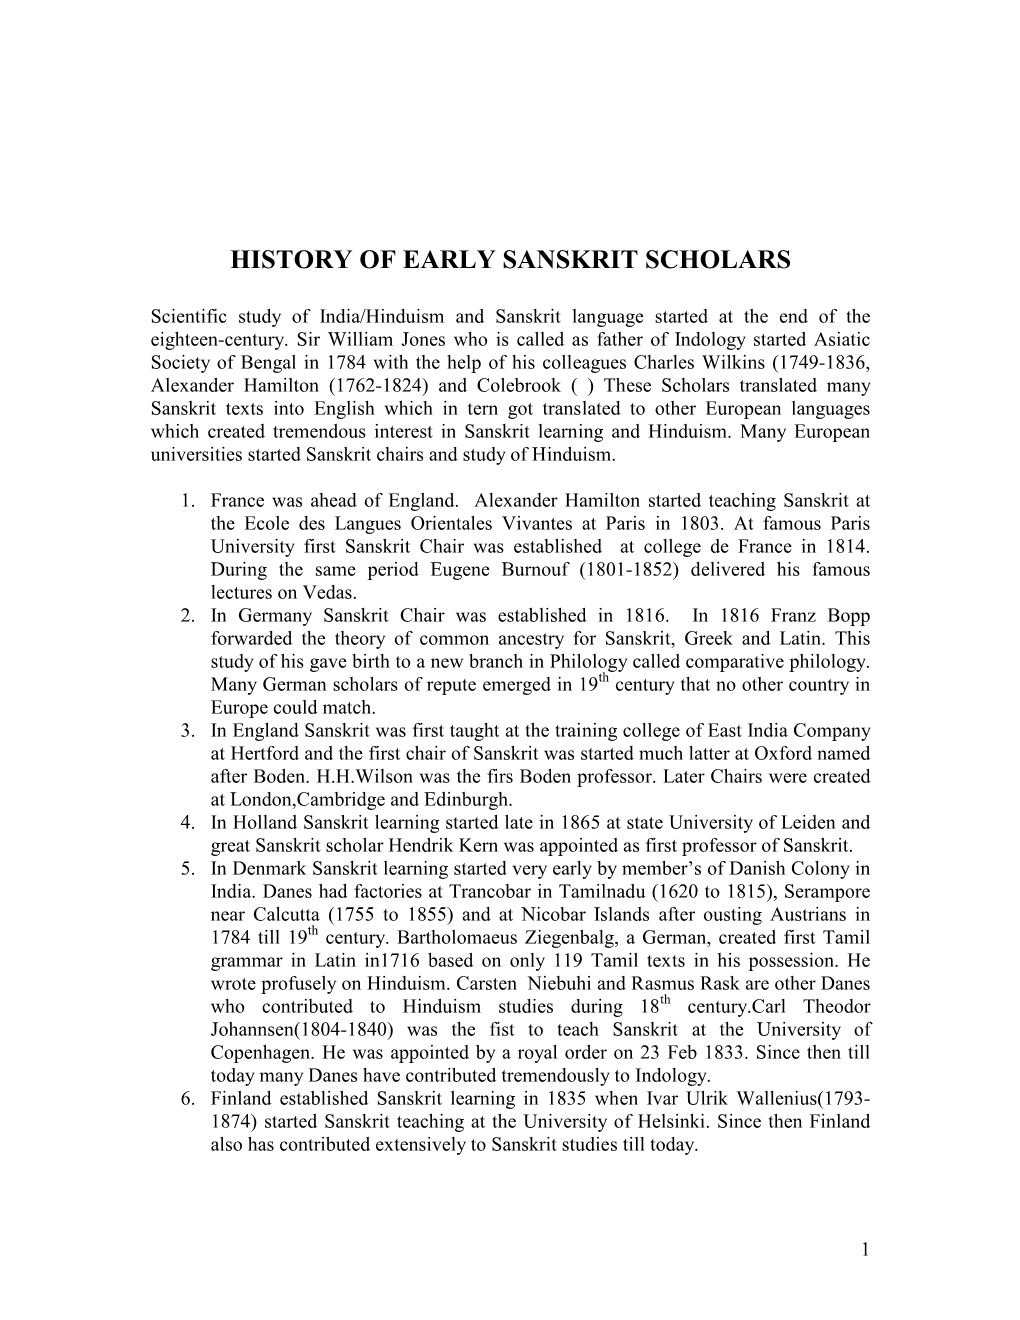 History of Early Sanskrit Scholars